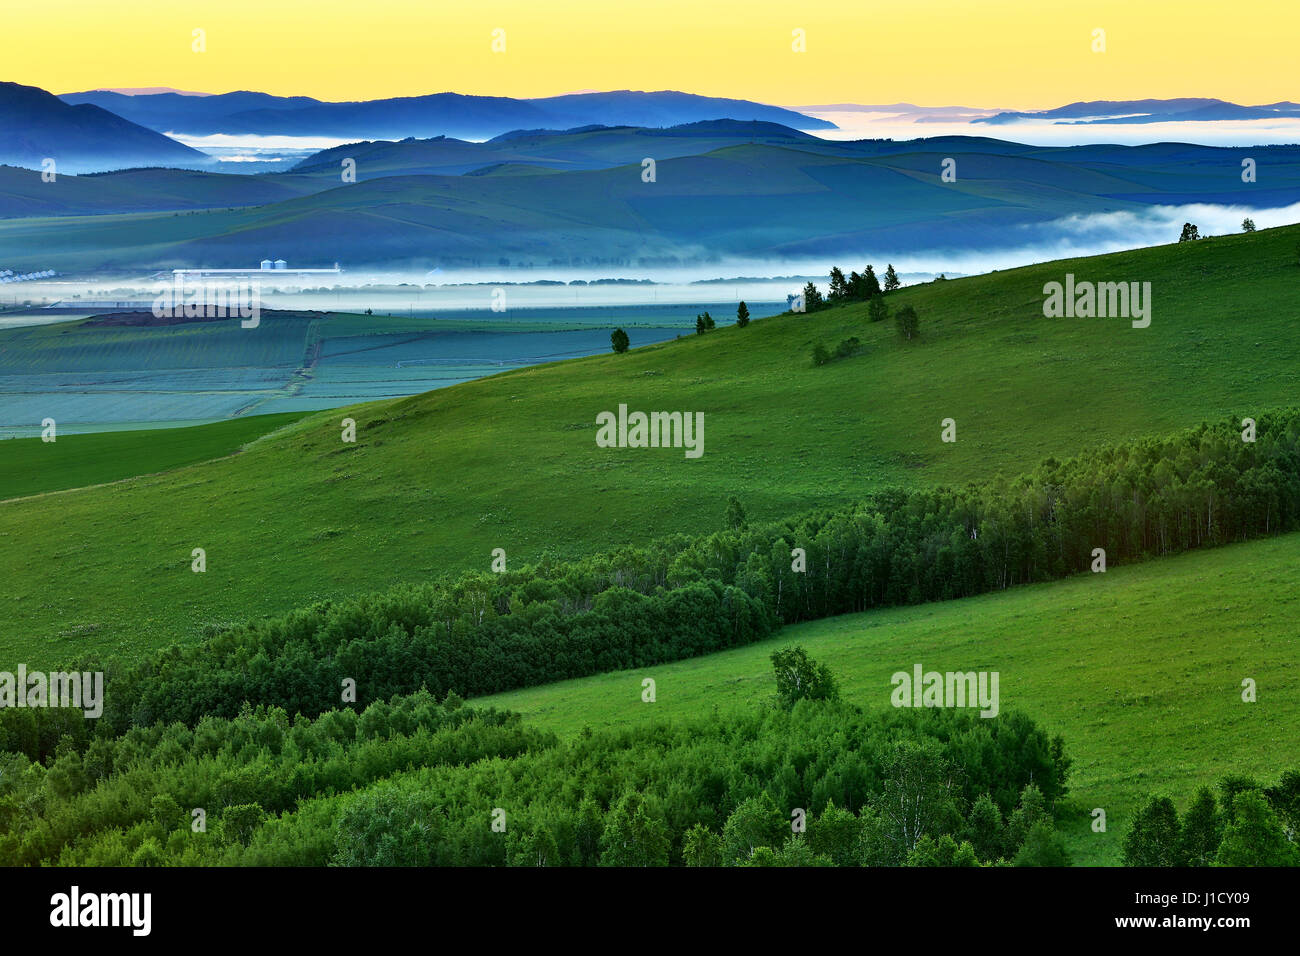 Hulun Buir Grassland scenery in Inner Mongolia Stock Photo - Alamy